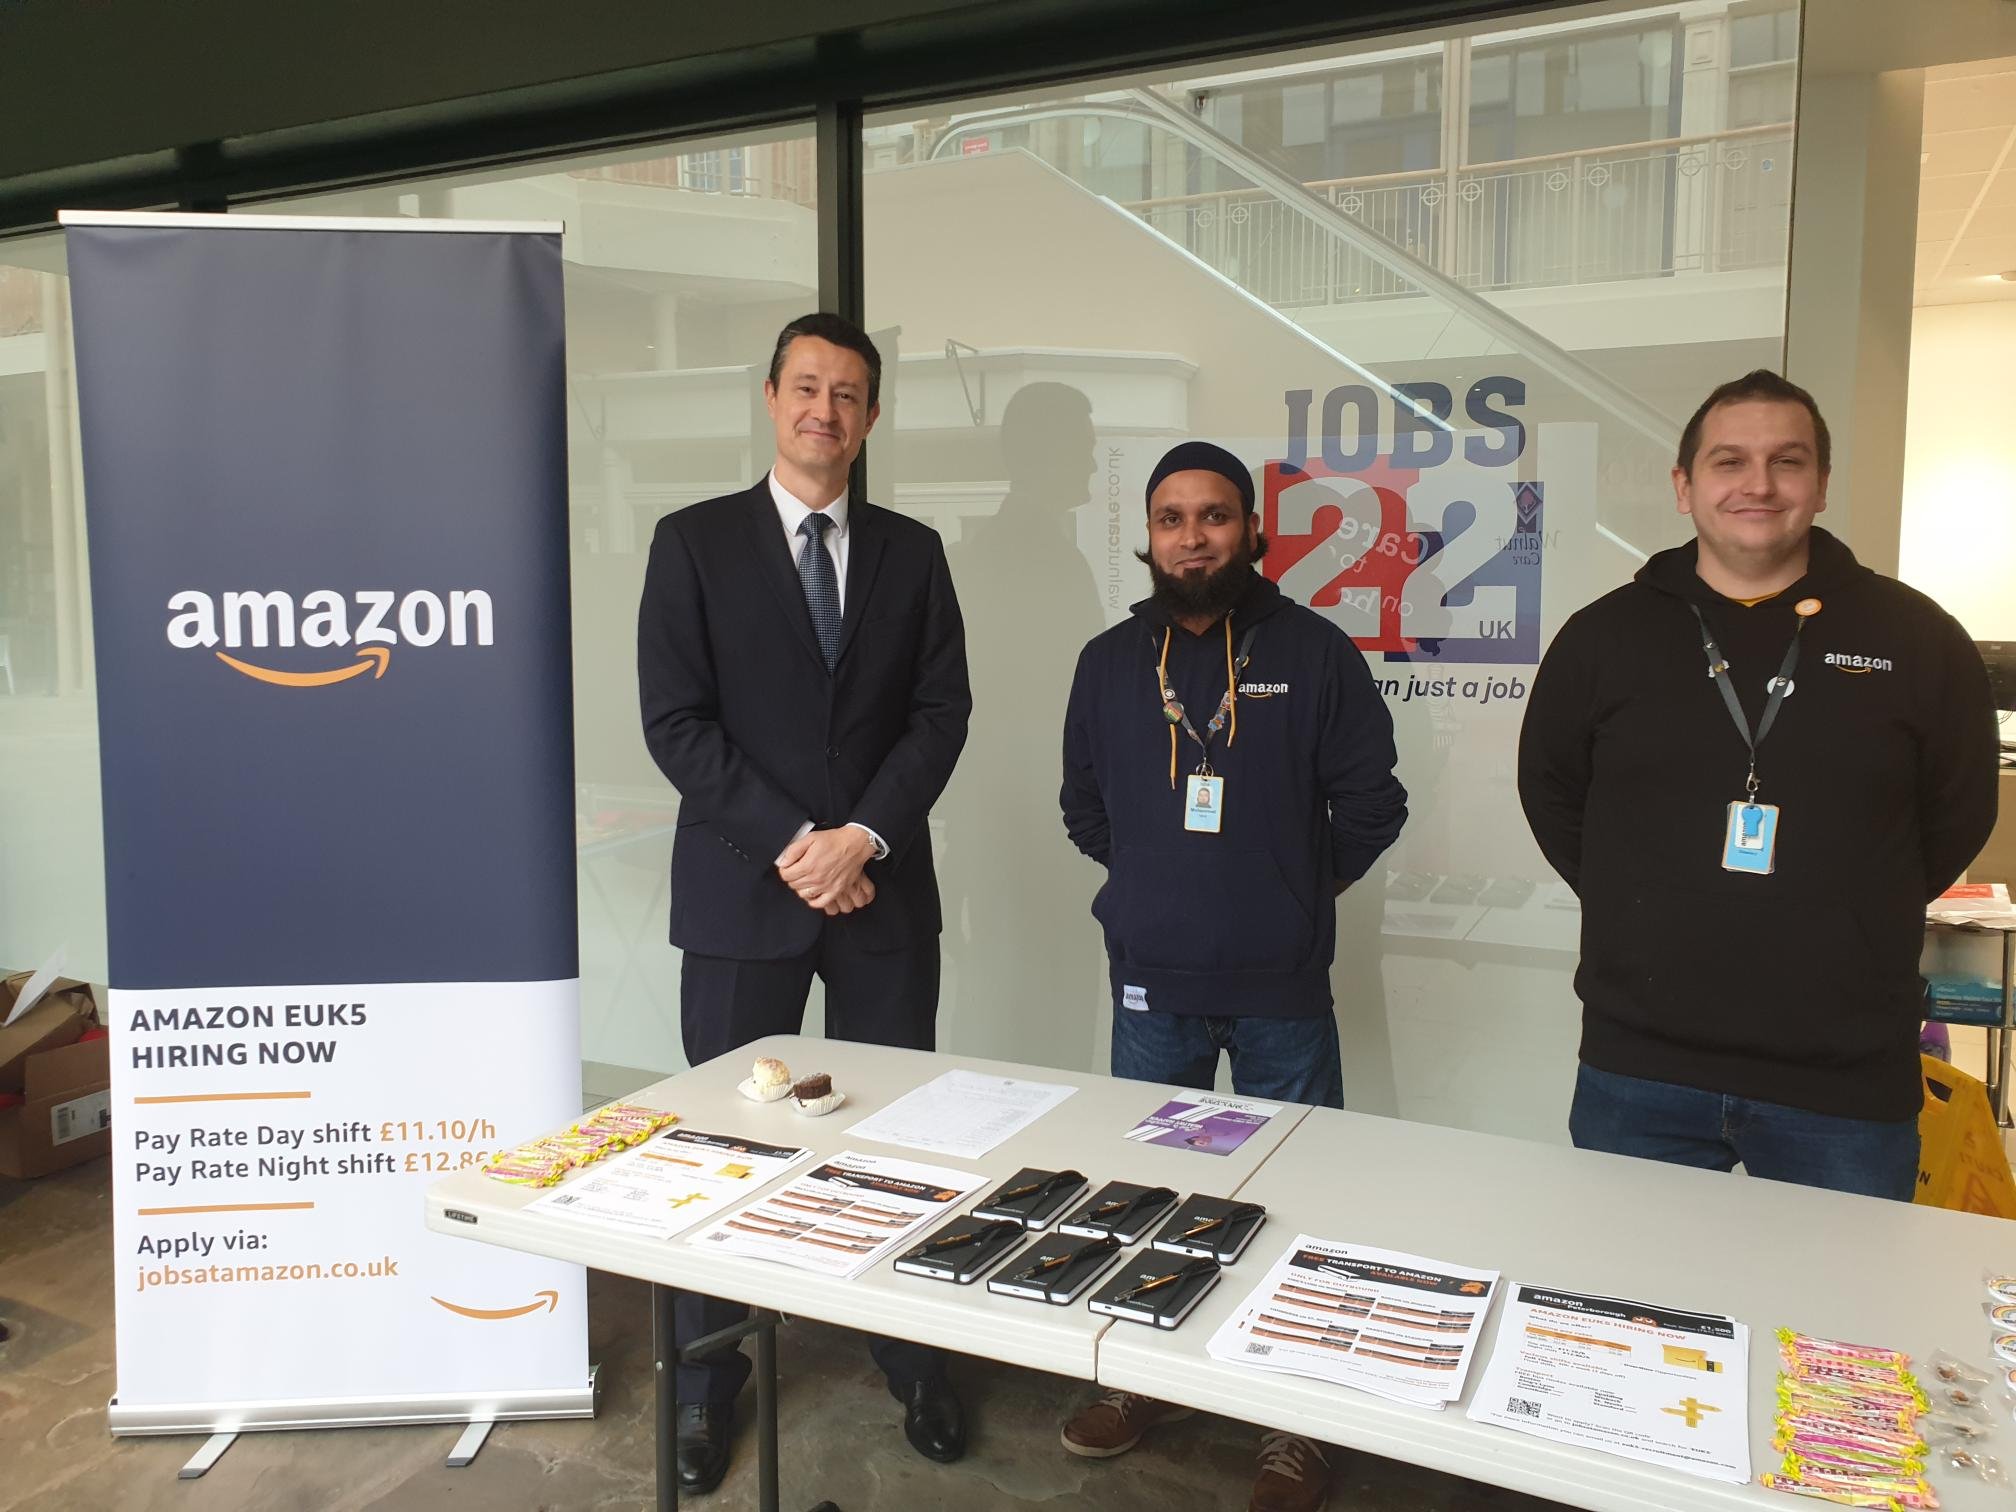 Amazon exhibitors at Grantham Job Fair